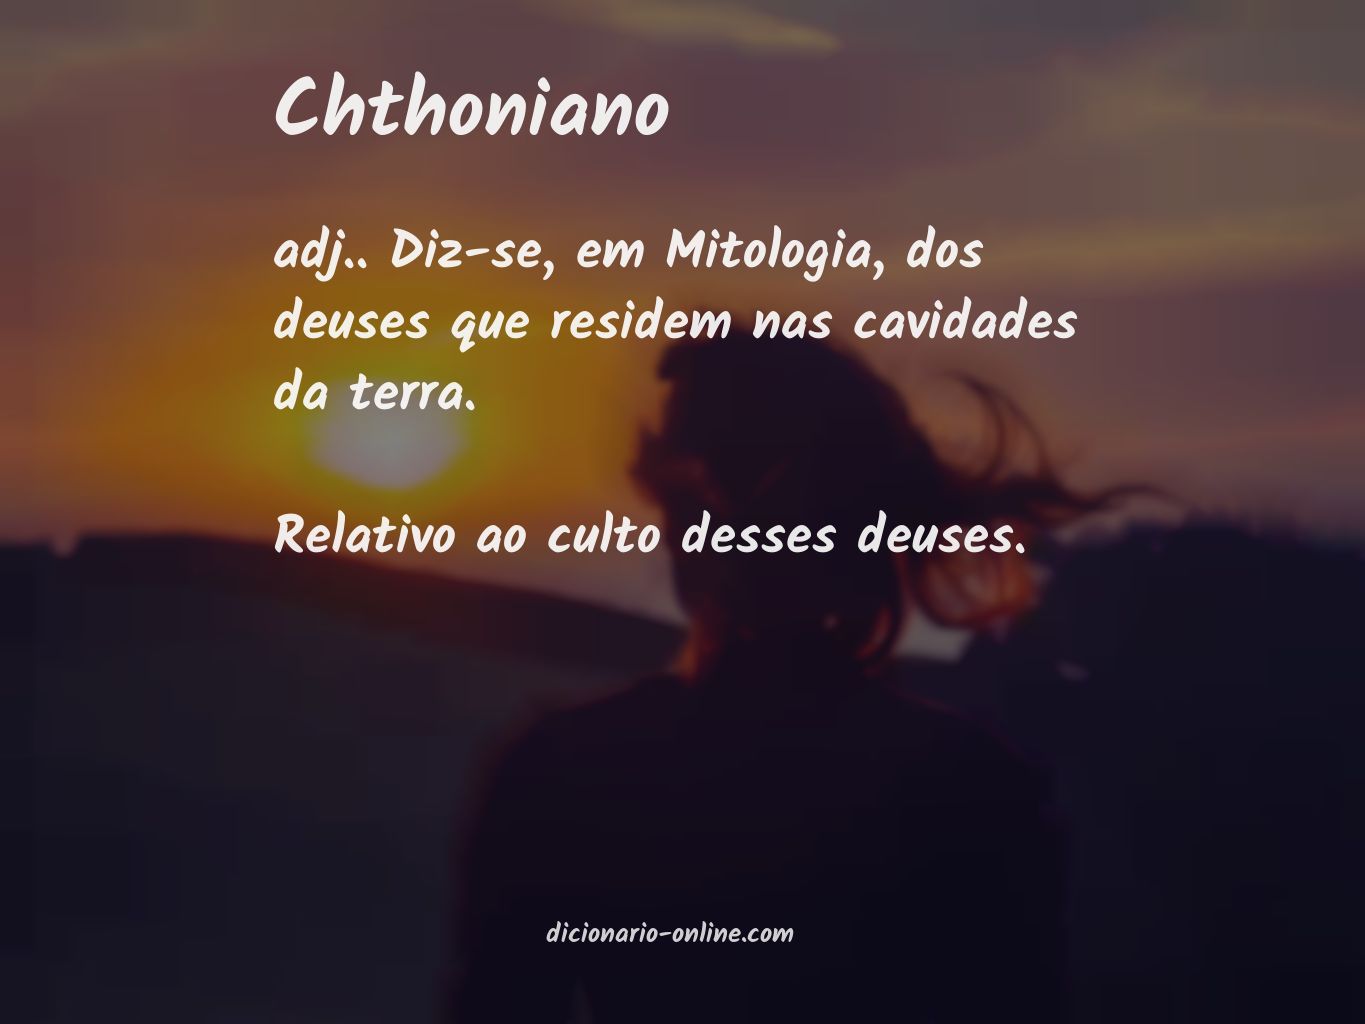 Significado de chthoniano